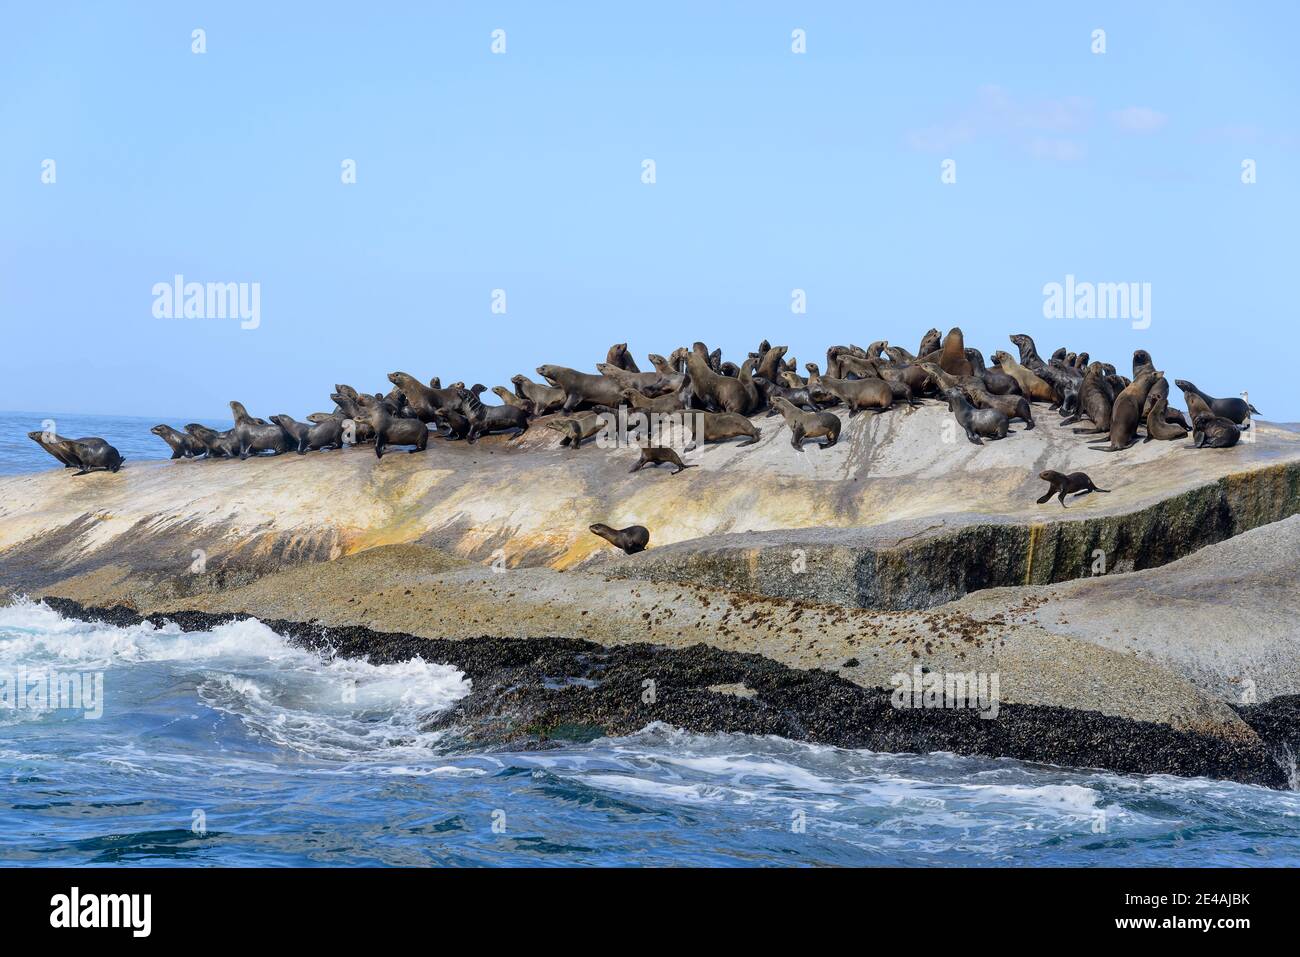 Südafrikanische Pelzrobbe (Arctocephalus pusillus pusillus), Kolonie von Seehunden auf Felsen im Meer, False Bay, Simons Town, Südafrika, Indischer Ozean Stockfoto